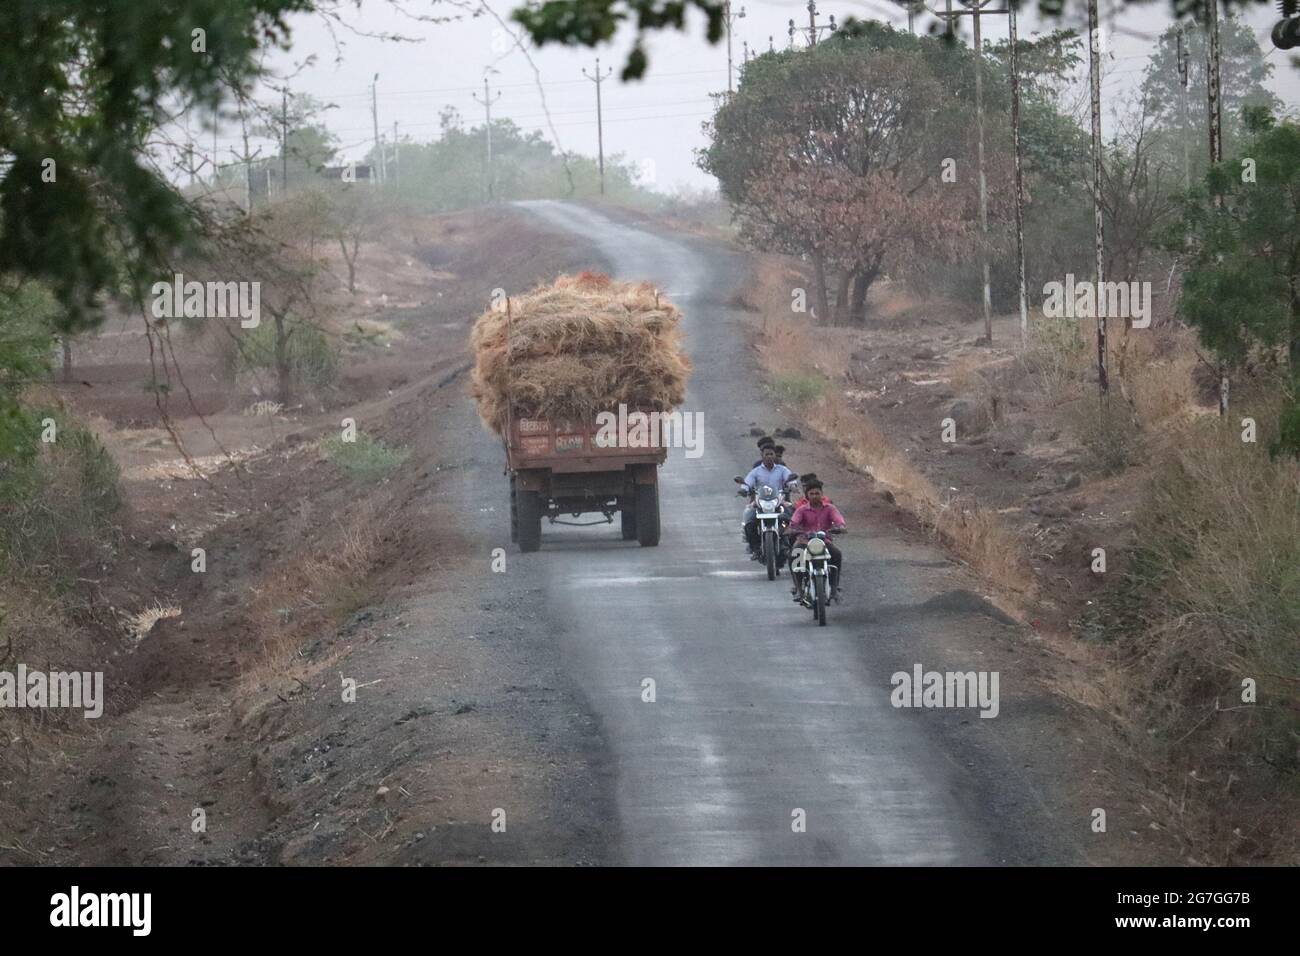 Dorfstraße in ländlicher Umgebung mit Traktor, der Heu oder getrocknetes Gras trägt, Dhule-Bezirk, Maharashtra Stockfoto